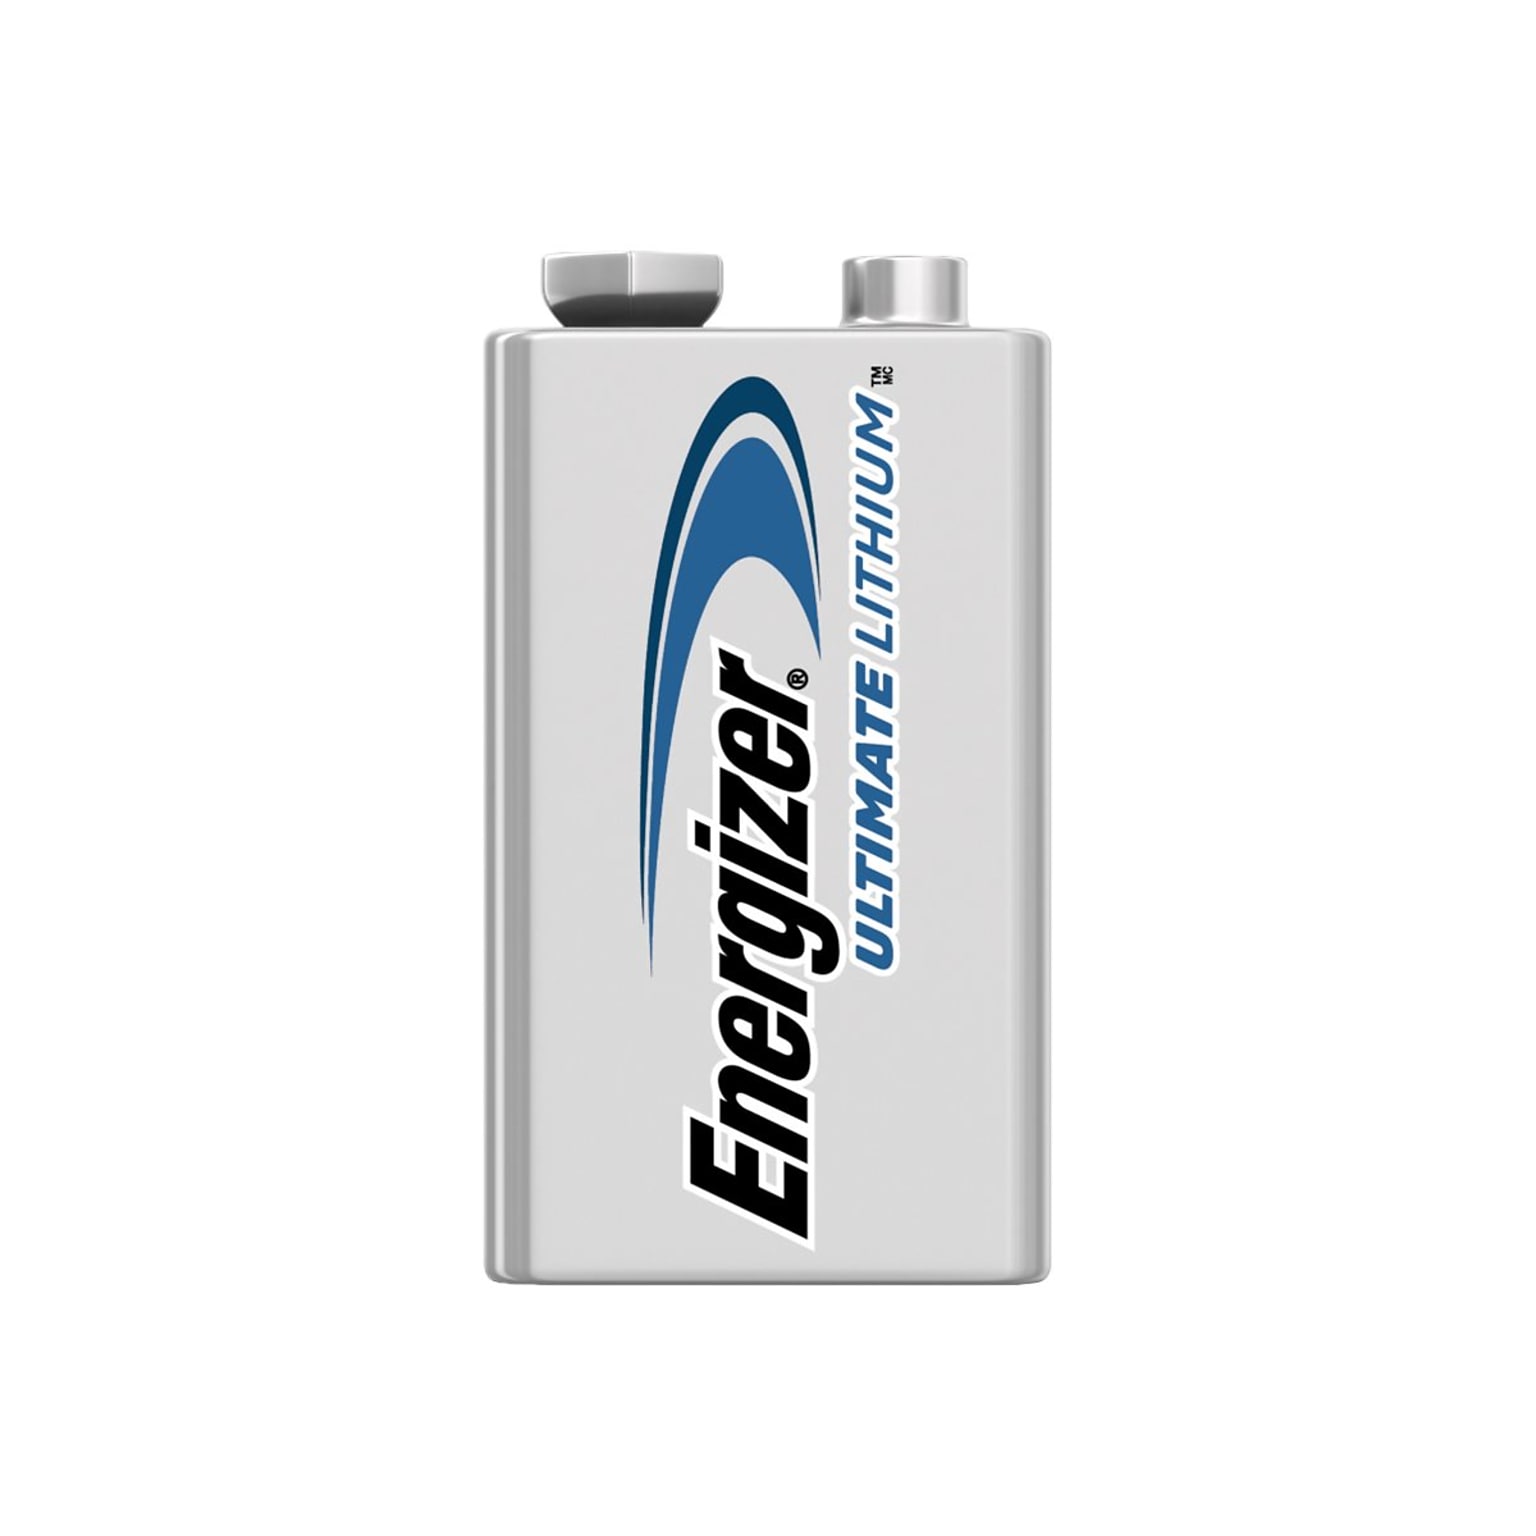 Energizer Ultimate Lithium Battery, 9V, Each (L522BP)